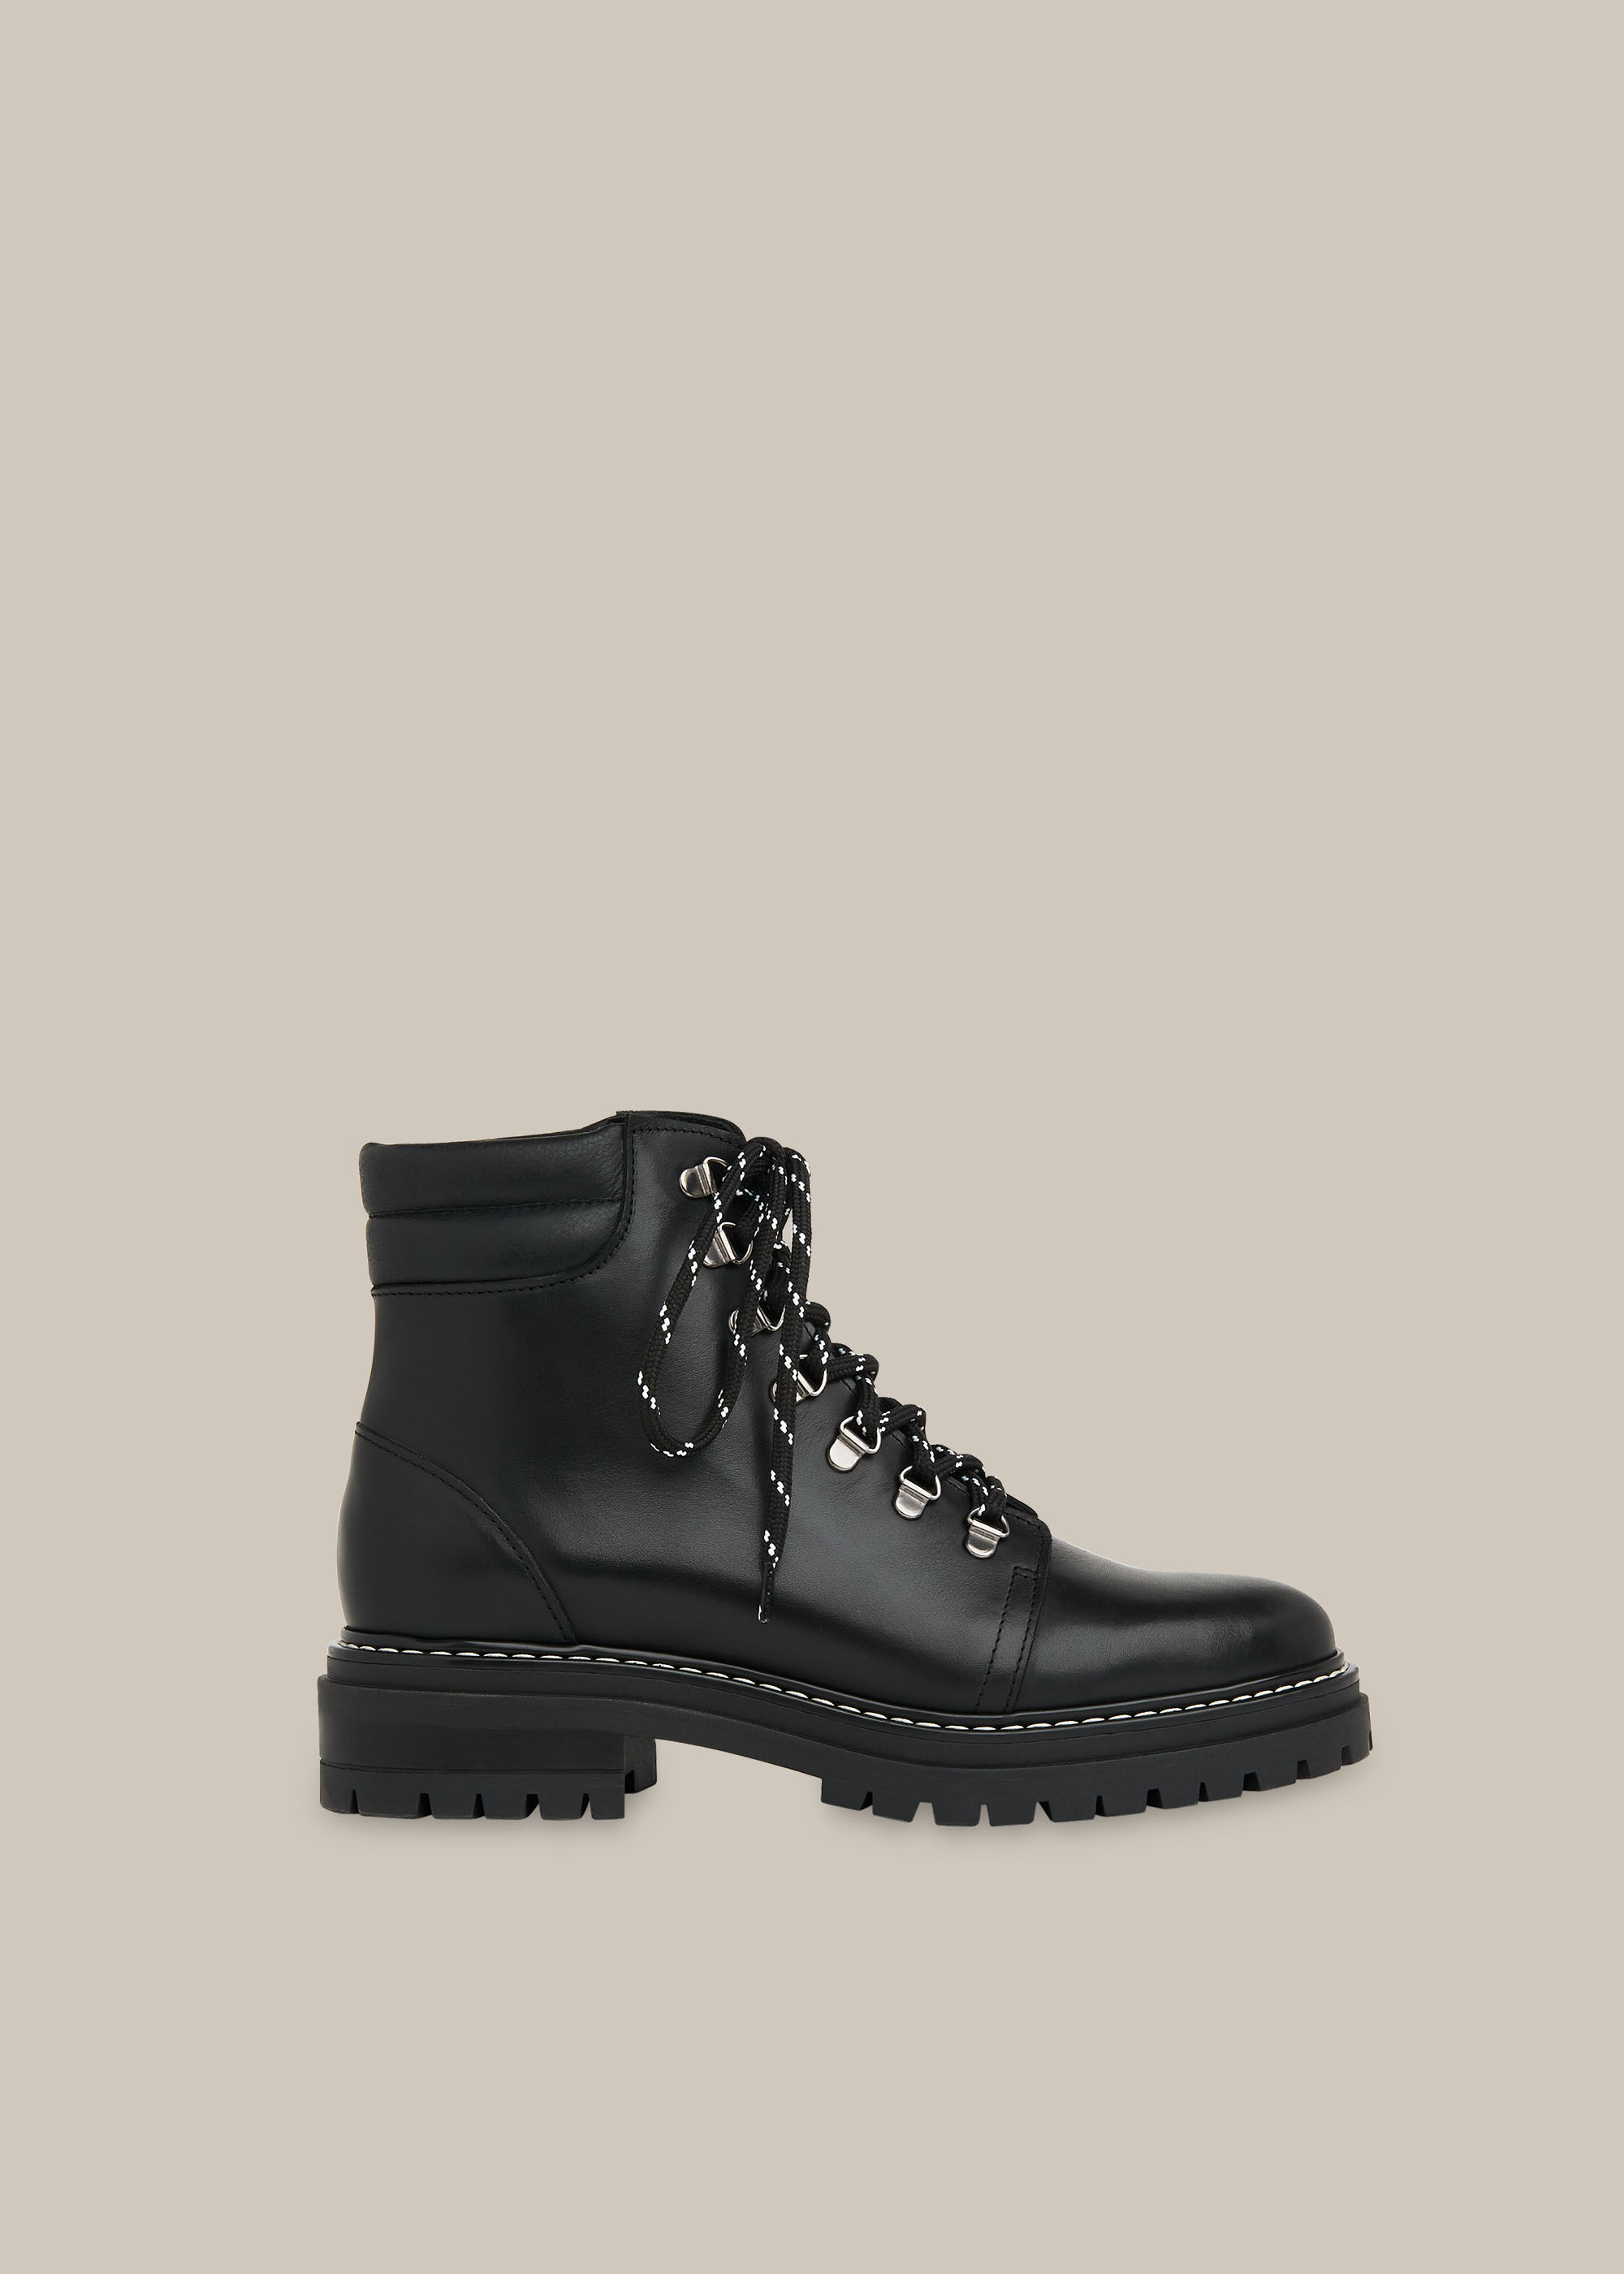 long black lace up boots